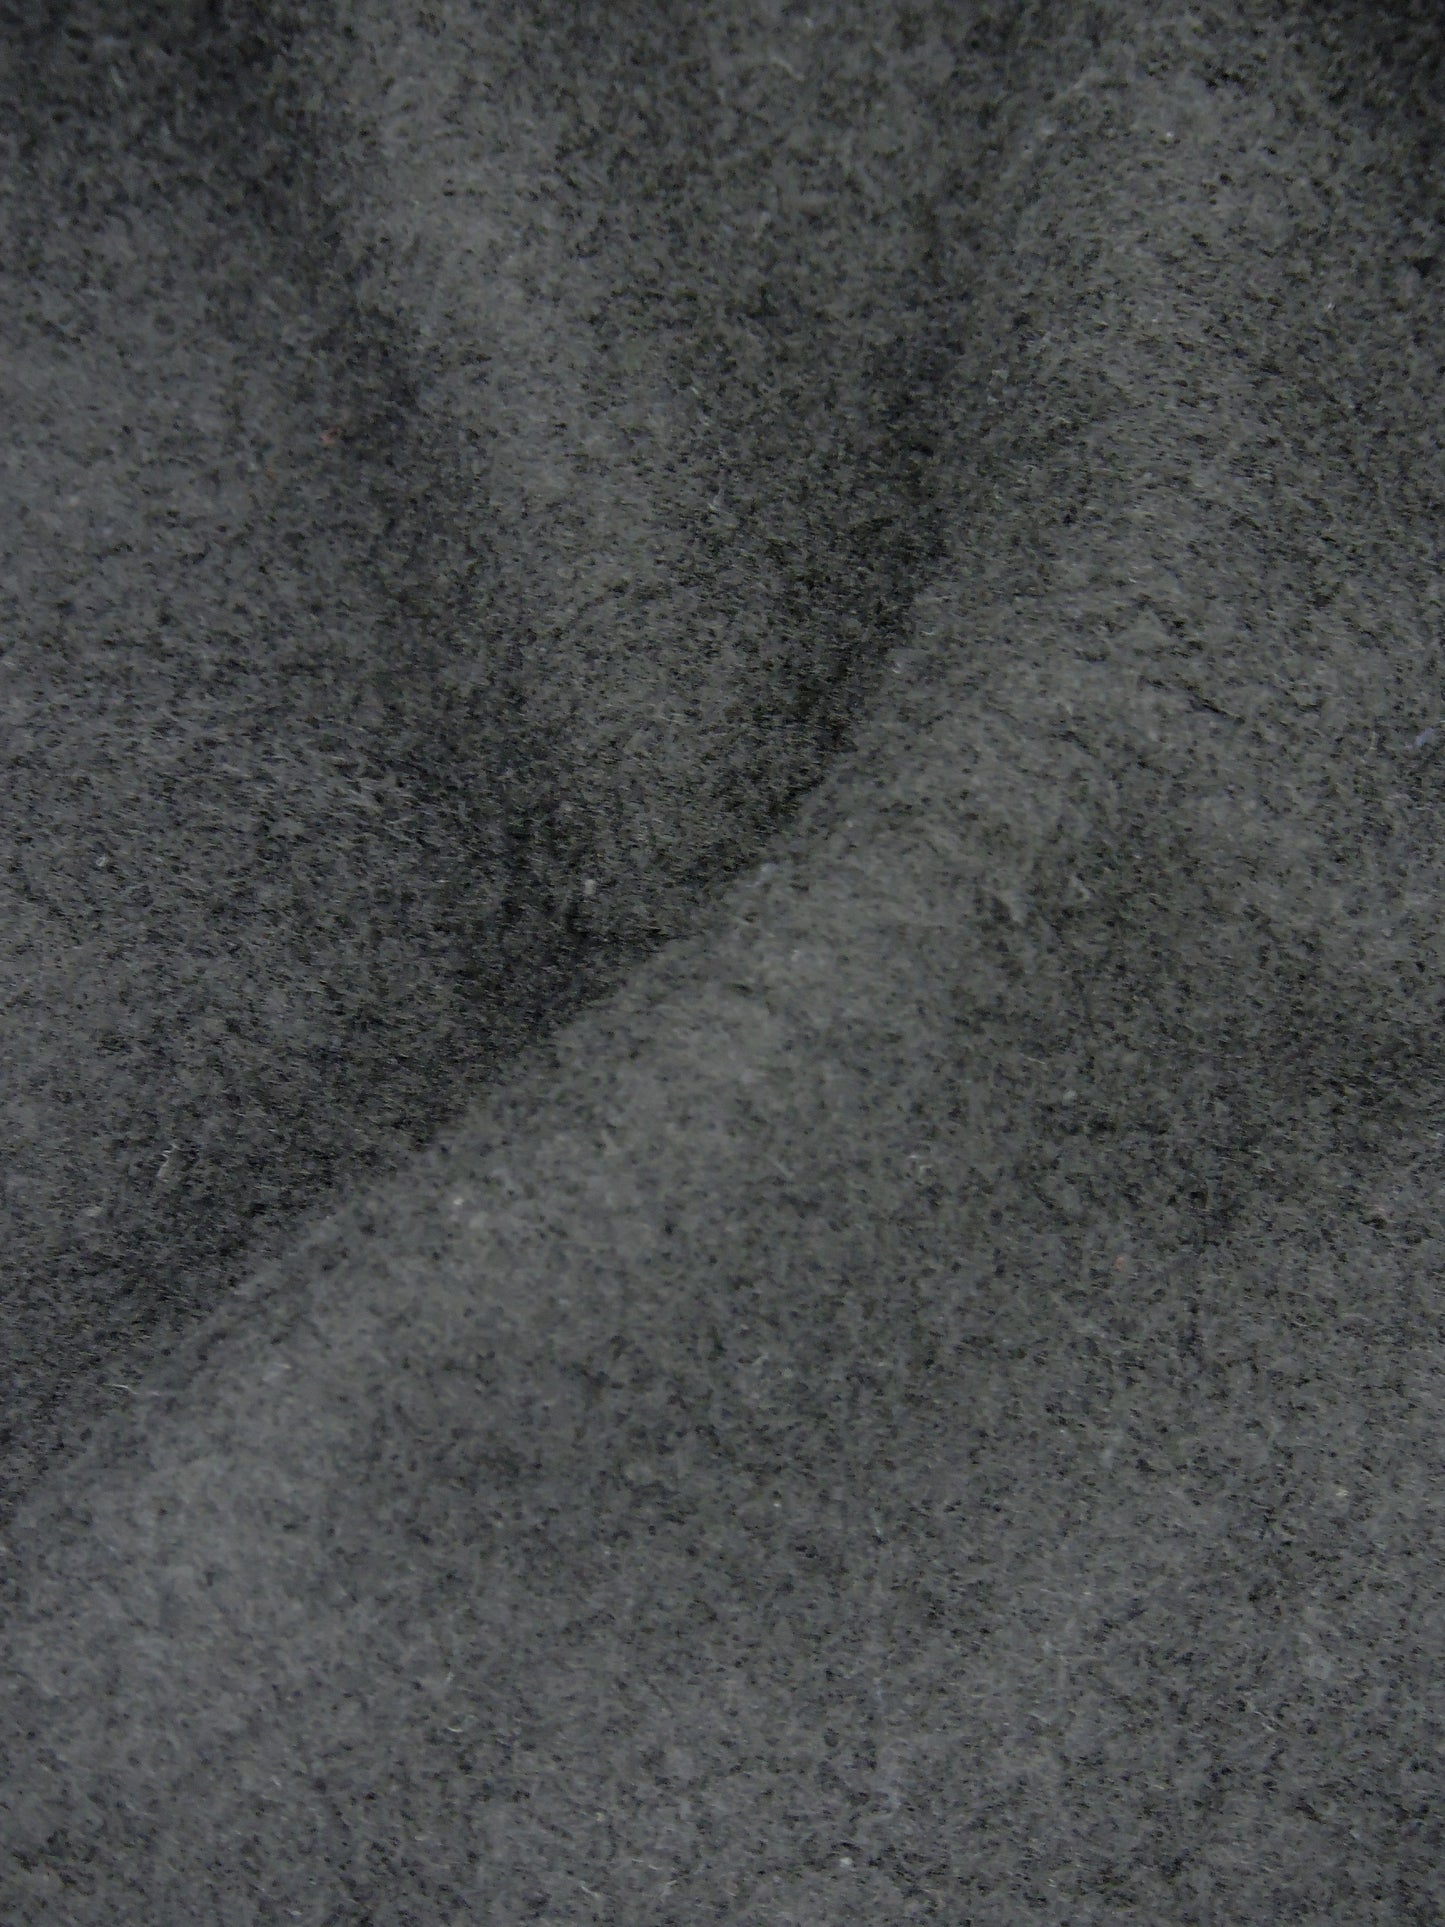 Close up of fleece material